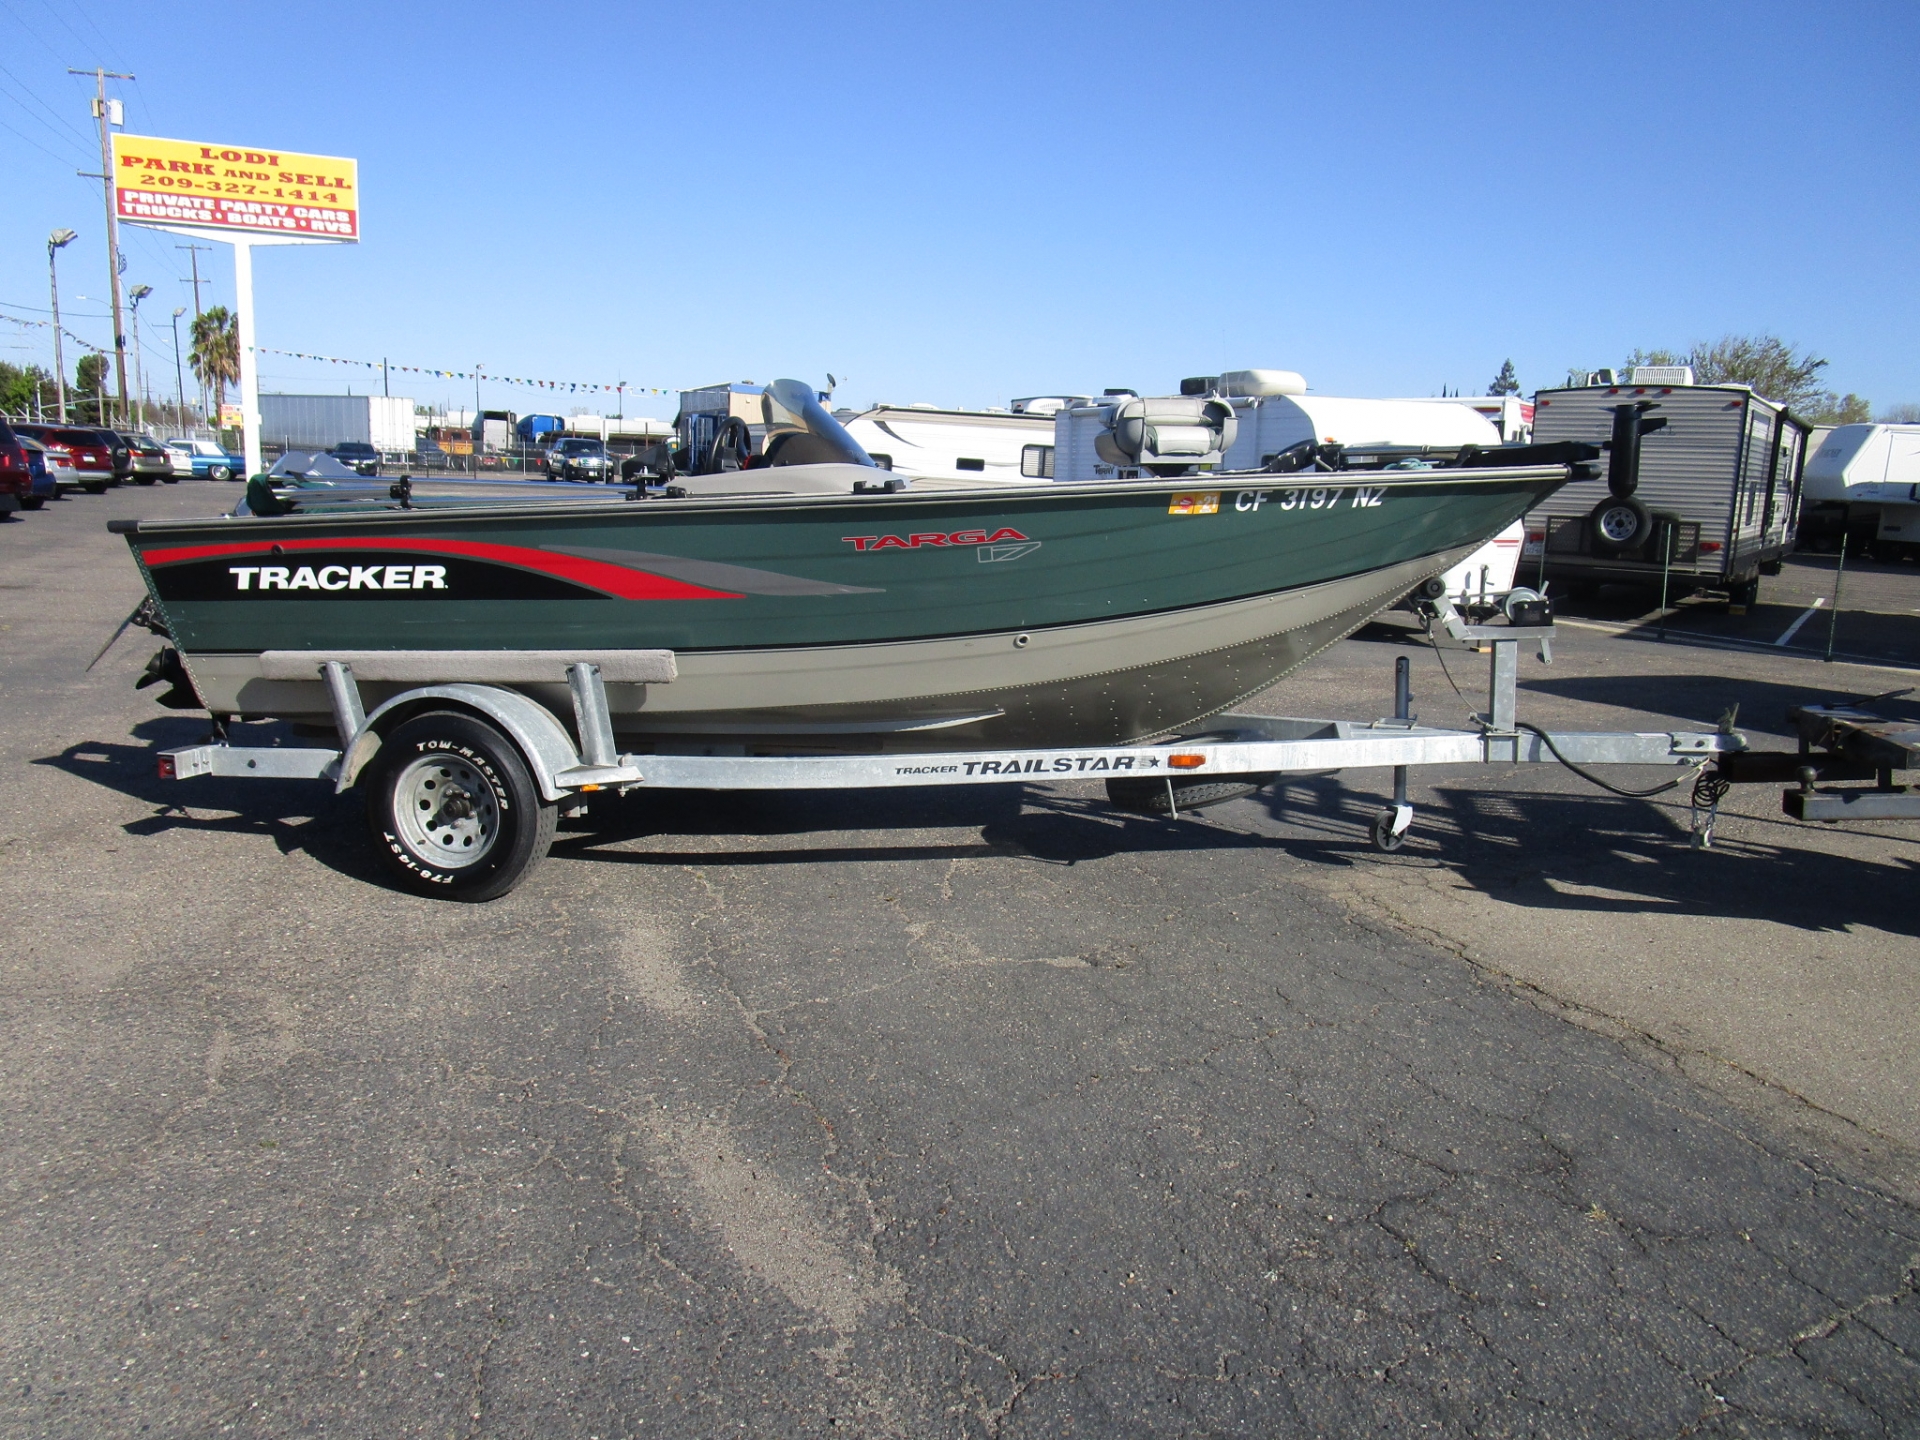 Boat for sale: 1997 Tracker Aluminum Fishing Boat Targa 17' in